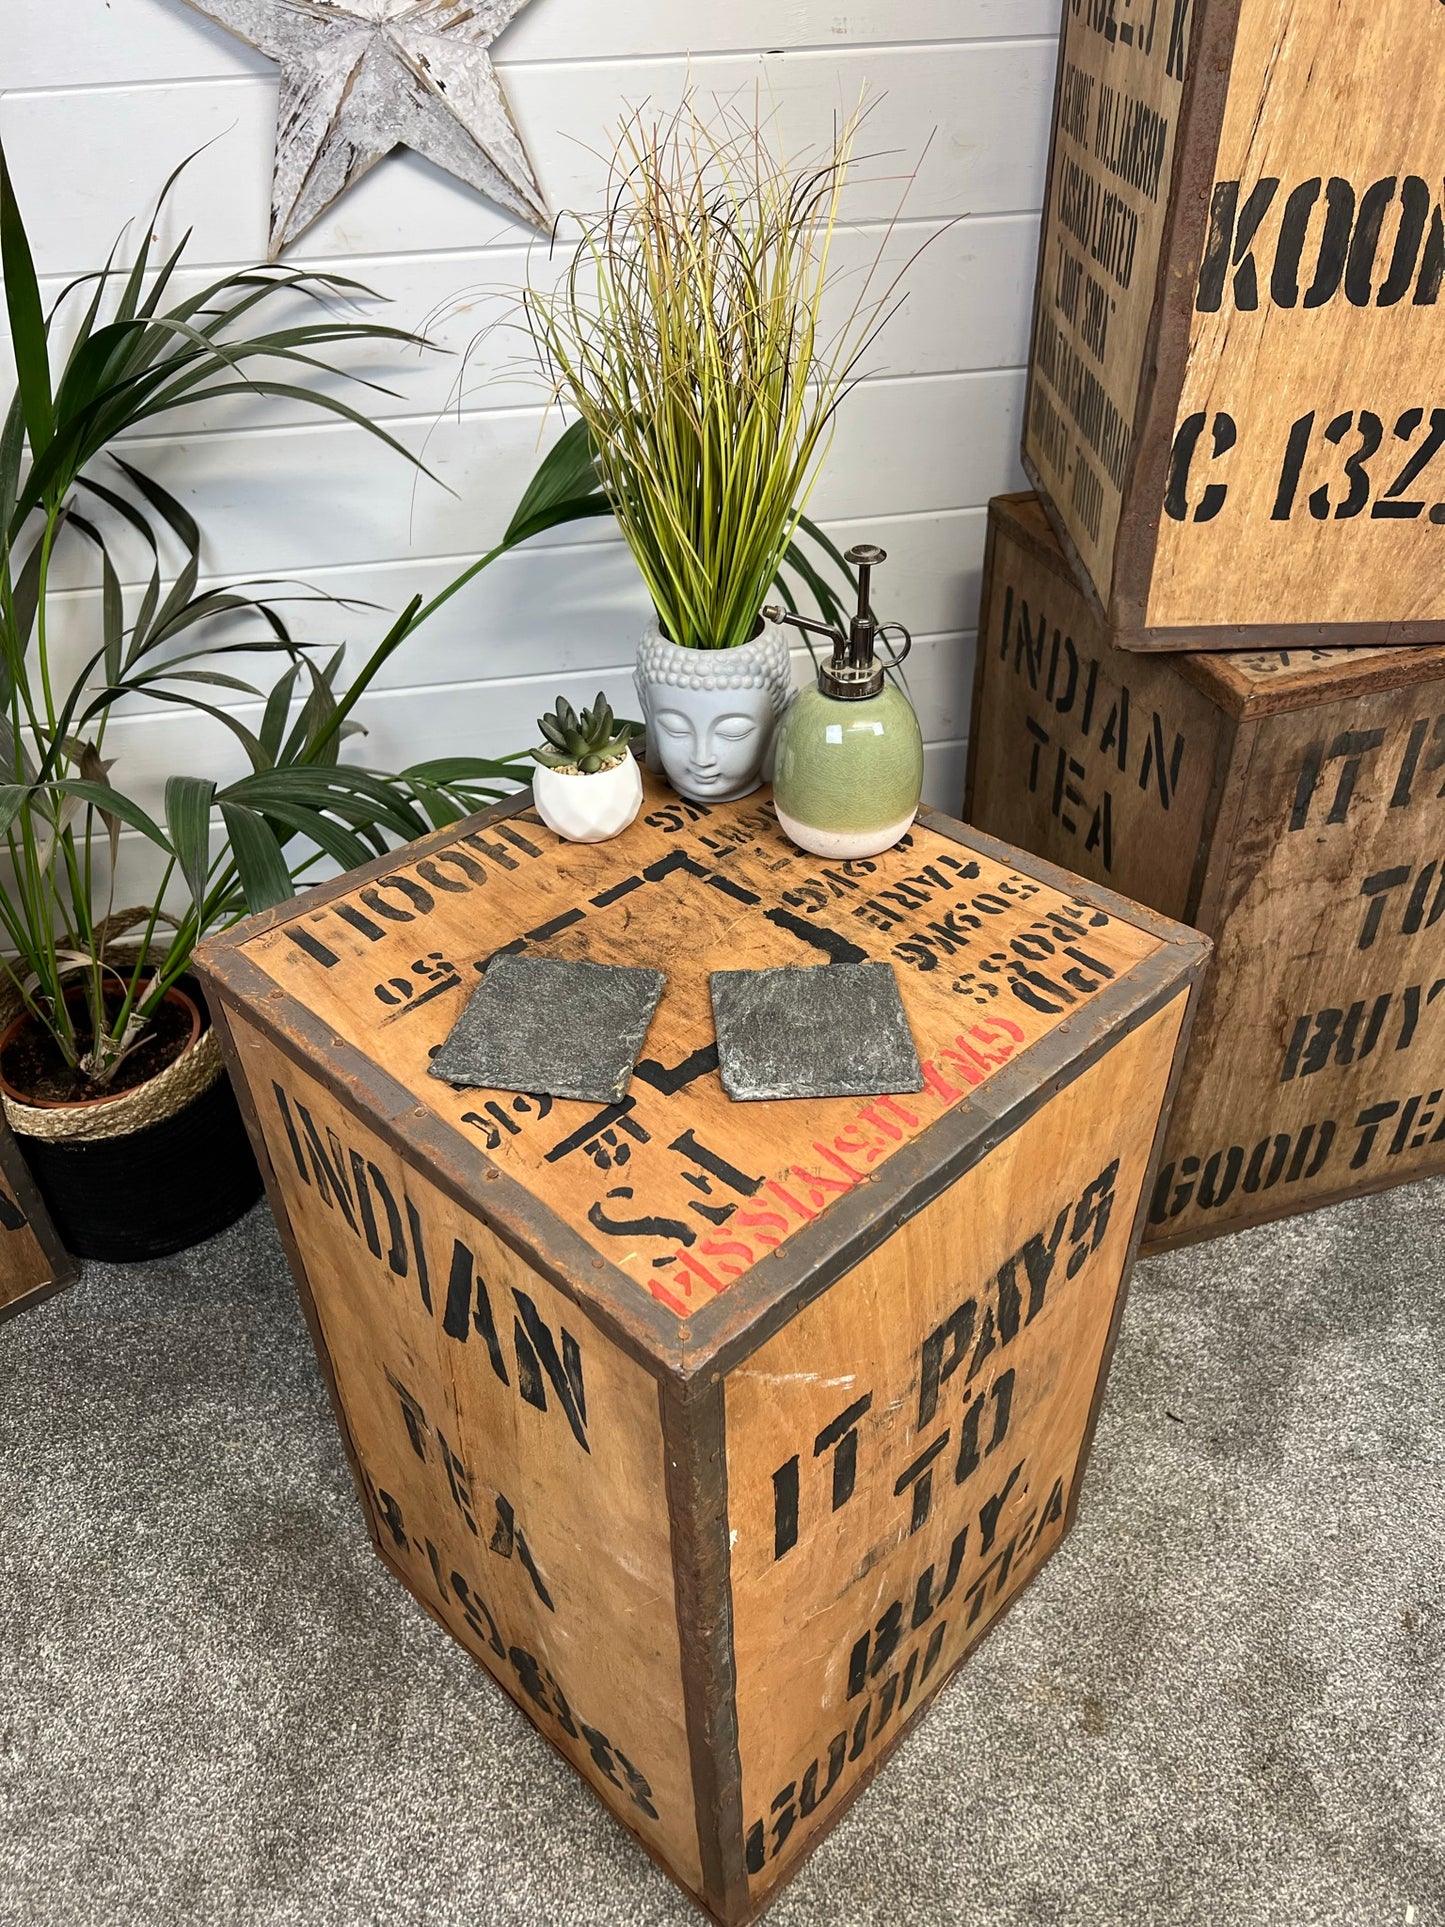 Rustic Industrial Vintage Tea Crate Wooden Box Coffee Side Table Home Shop Display